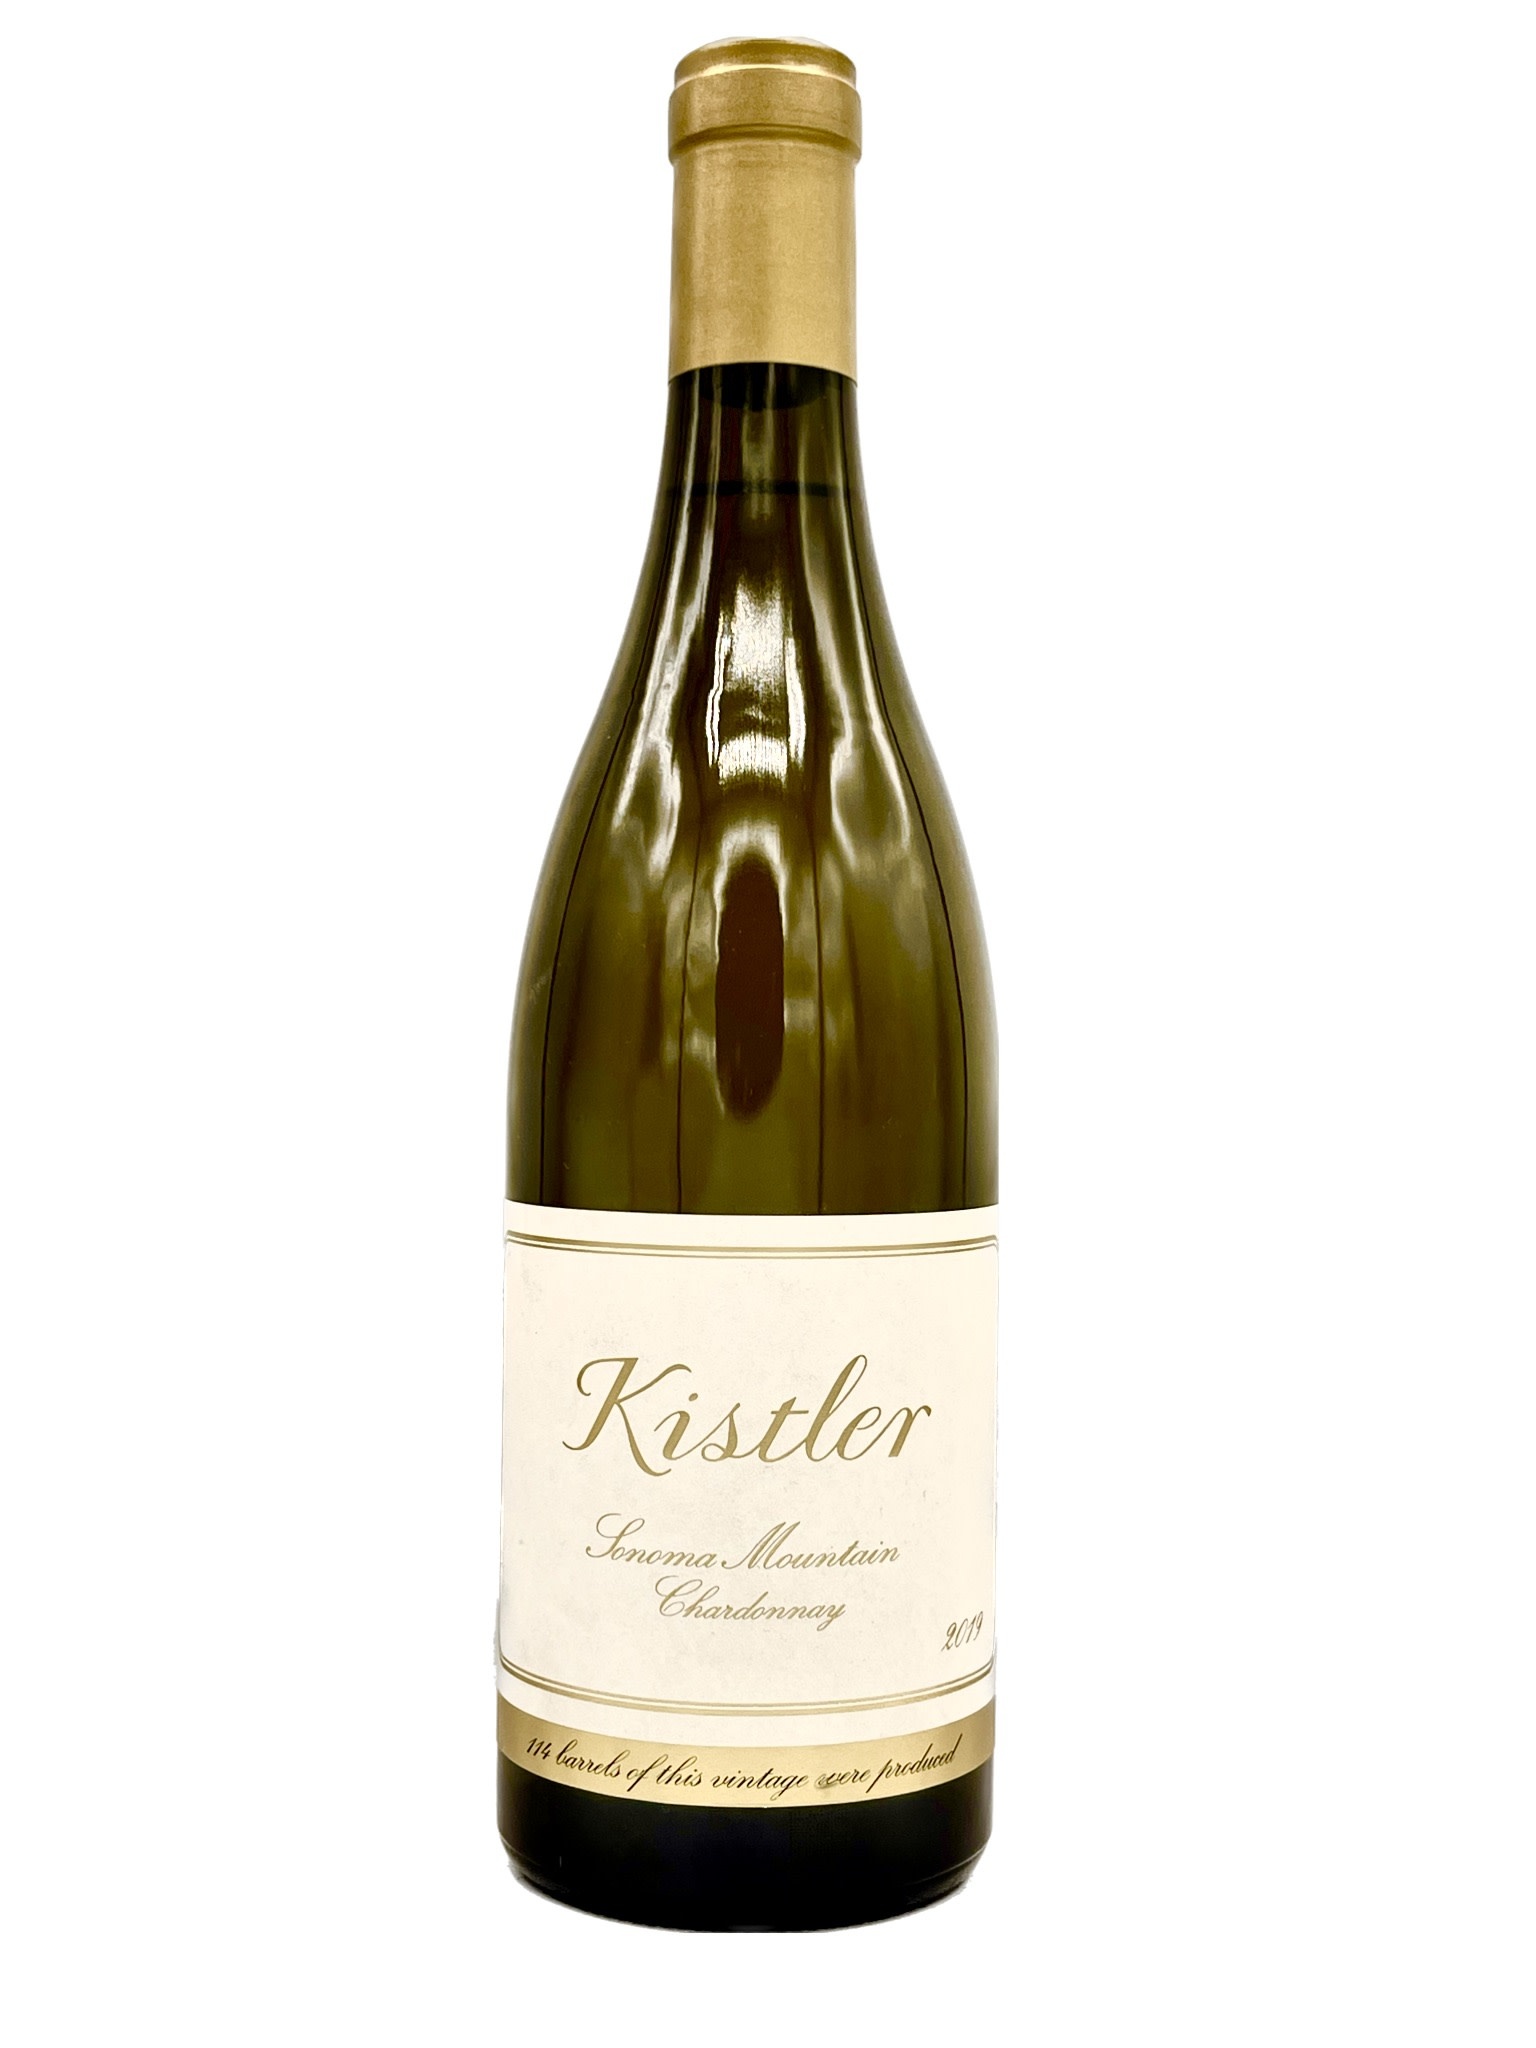 Sonoma Mountain Chardonnay 2019 Kistler "Kistler Vineyards" 750ml